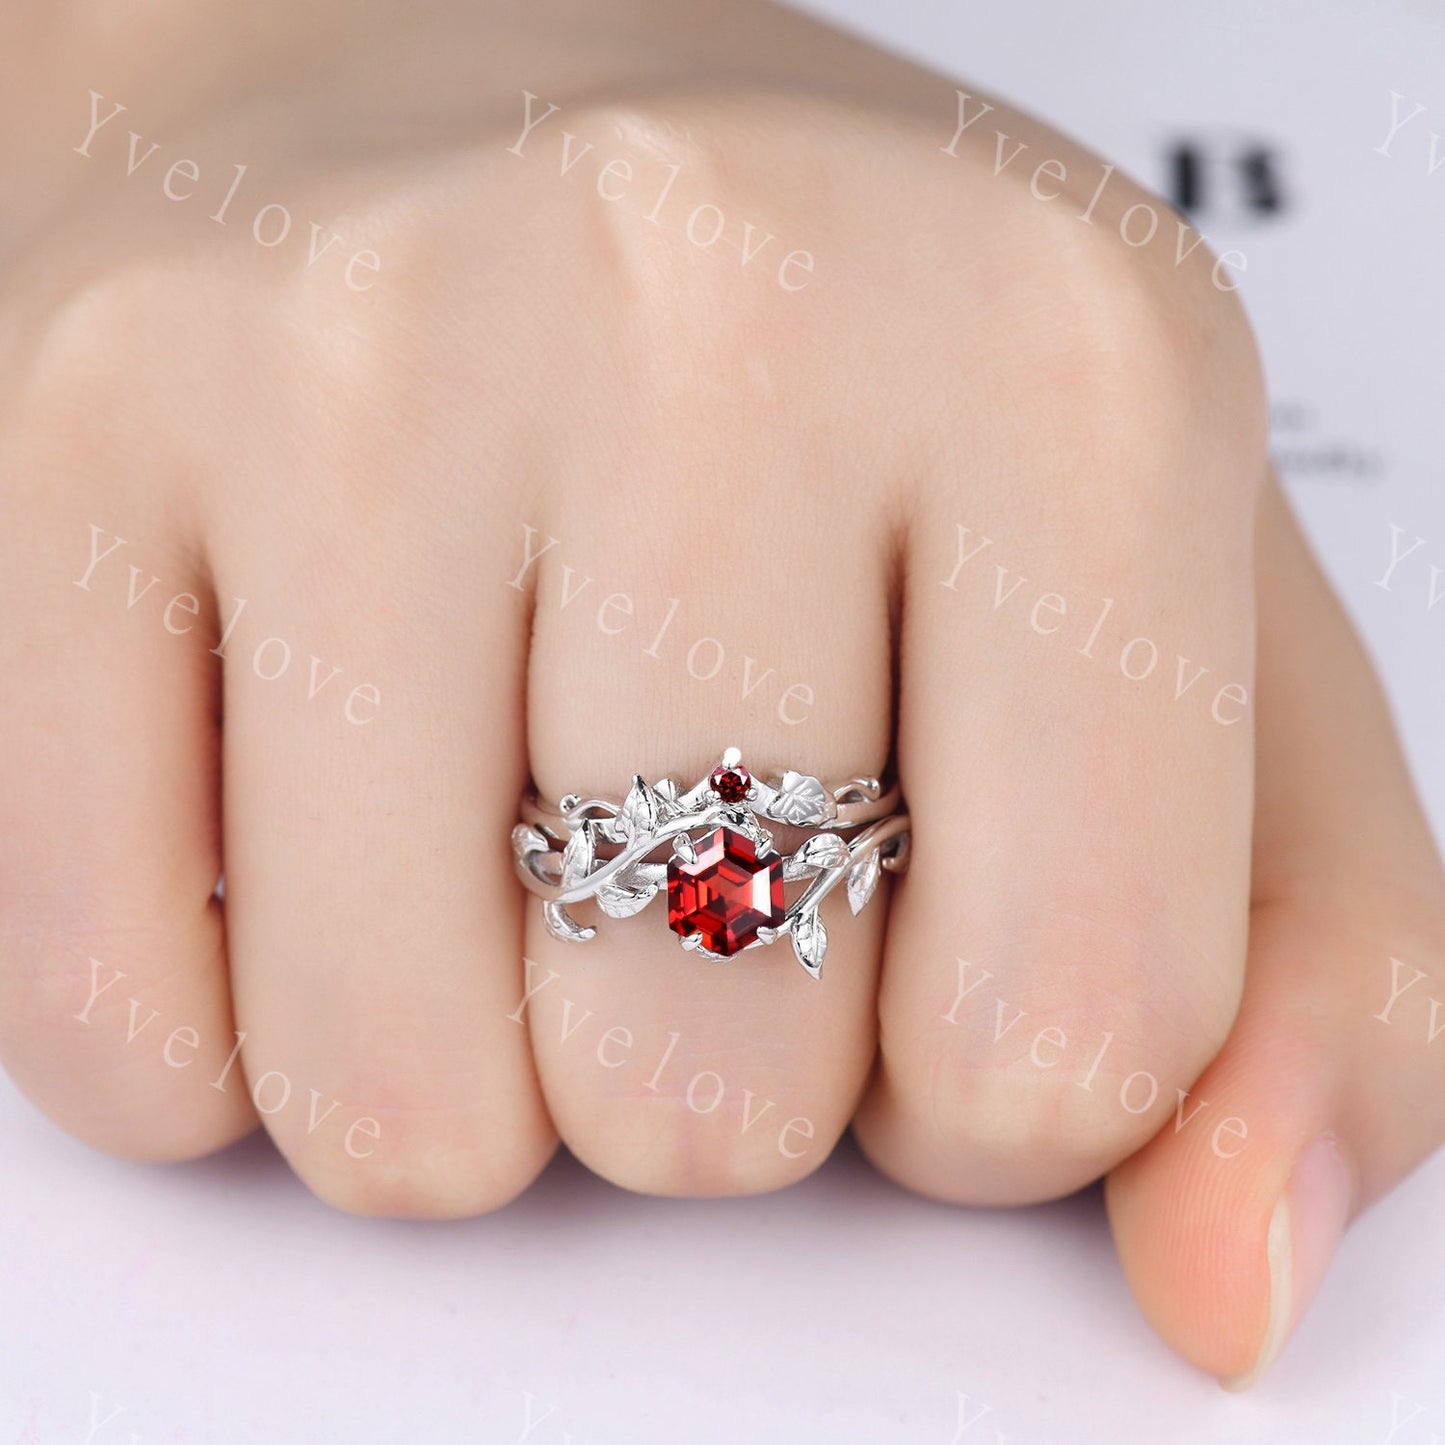 Hexagon Garnet Ring Set,Vintage Twig Vine Leaf Ring,Unique Garnet Engagement Ring,January Ring, Promise Anniversary Bridal Ring Gift,Silver